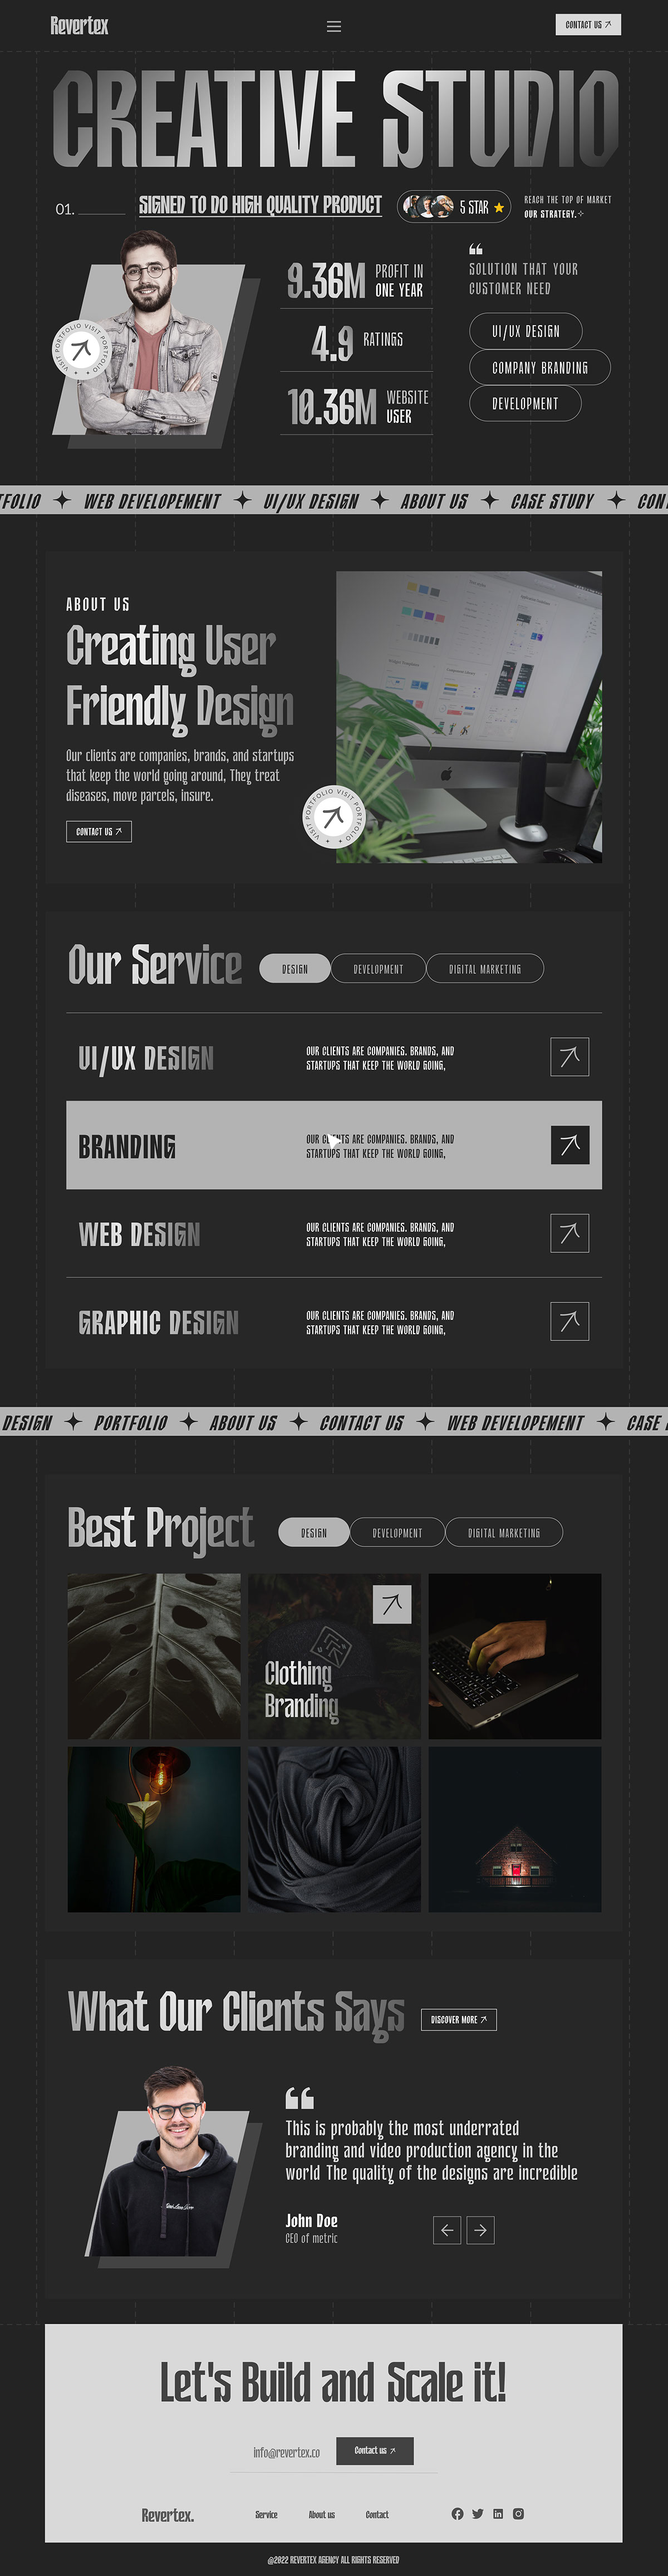 Creative studio Landing Page Design rendition image